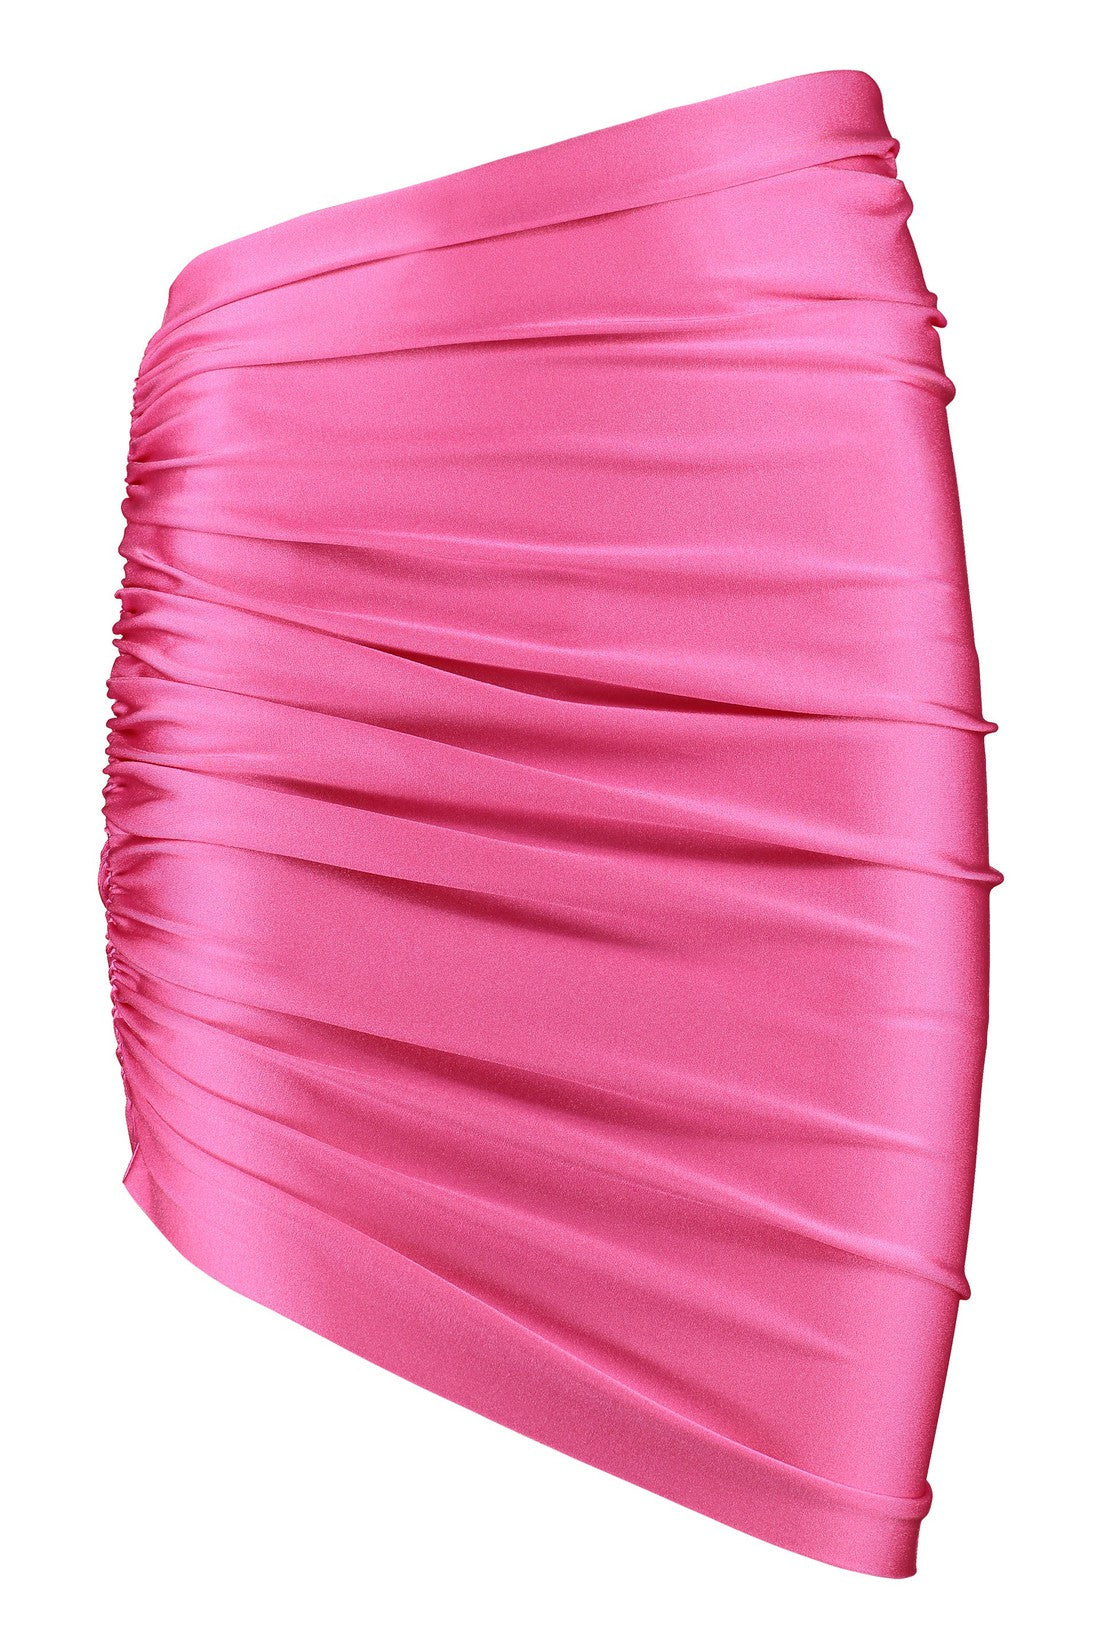 Piralo-OUTLET-SALE-Technical fabric mini-skirt-ARCHIVIST